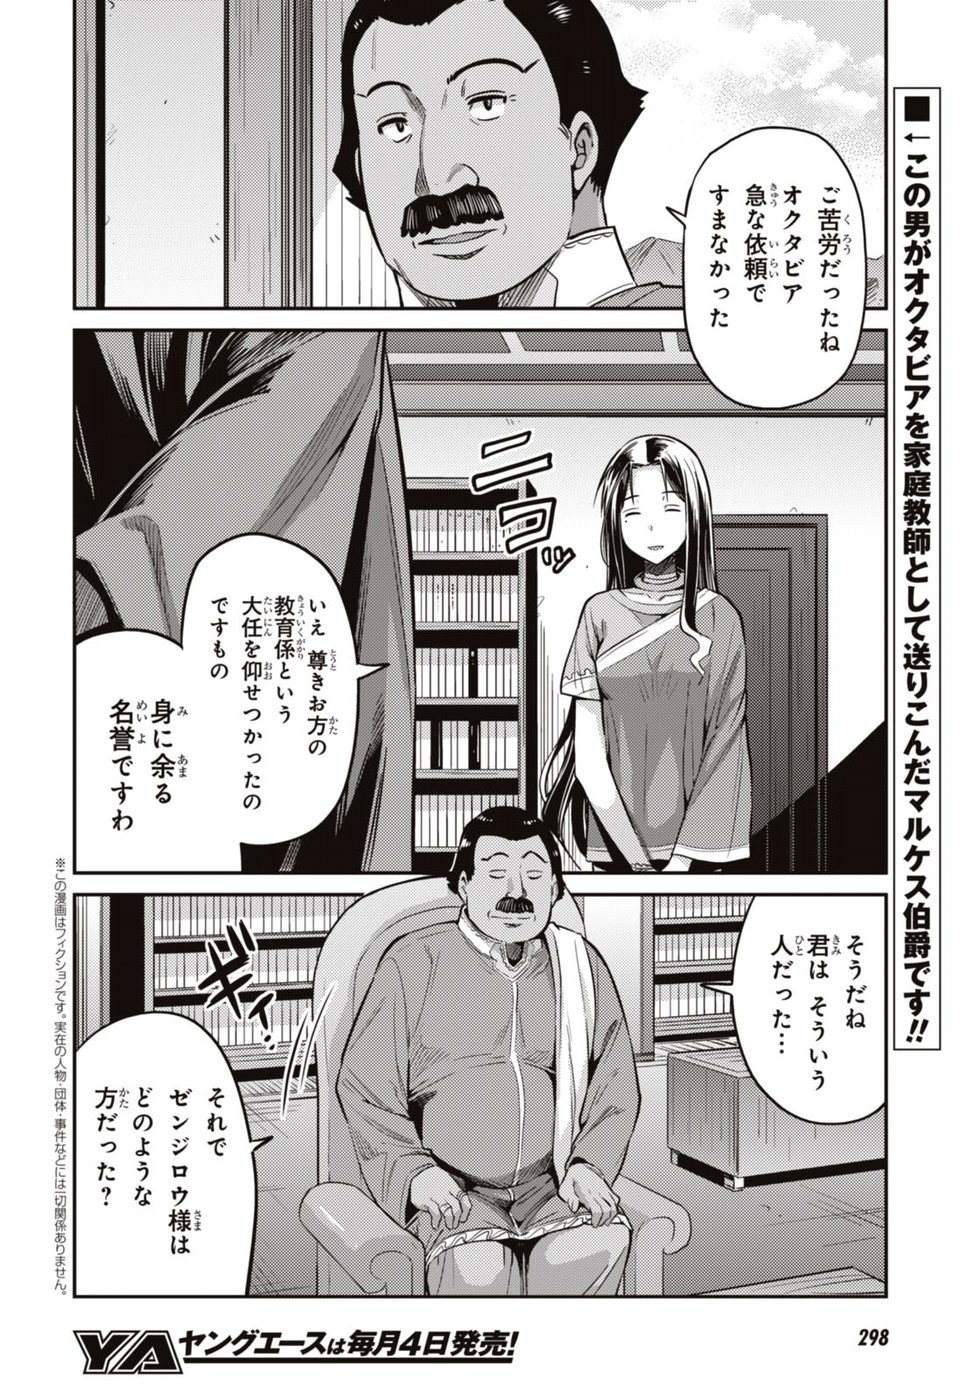 Risou no Himo Seikatsu - Chapter 007 - Page 2